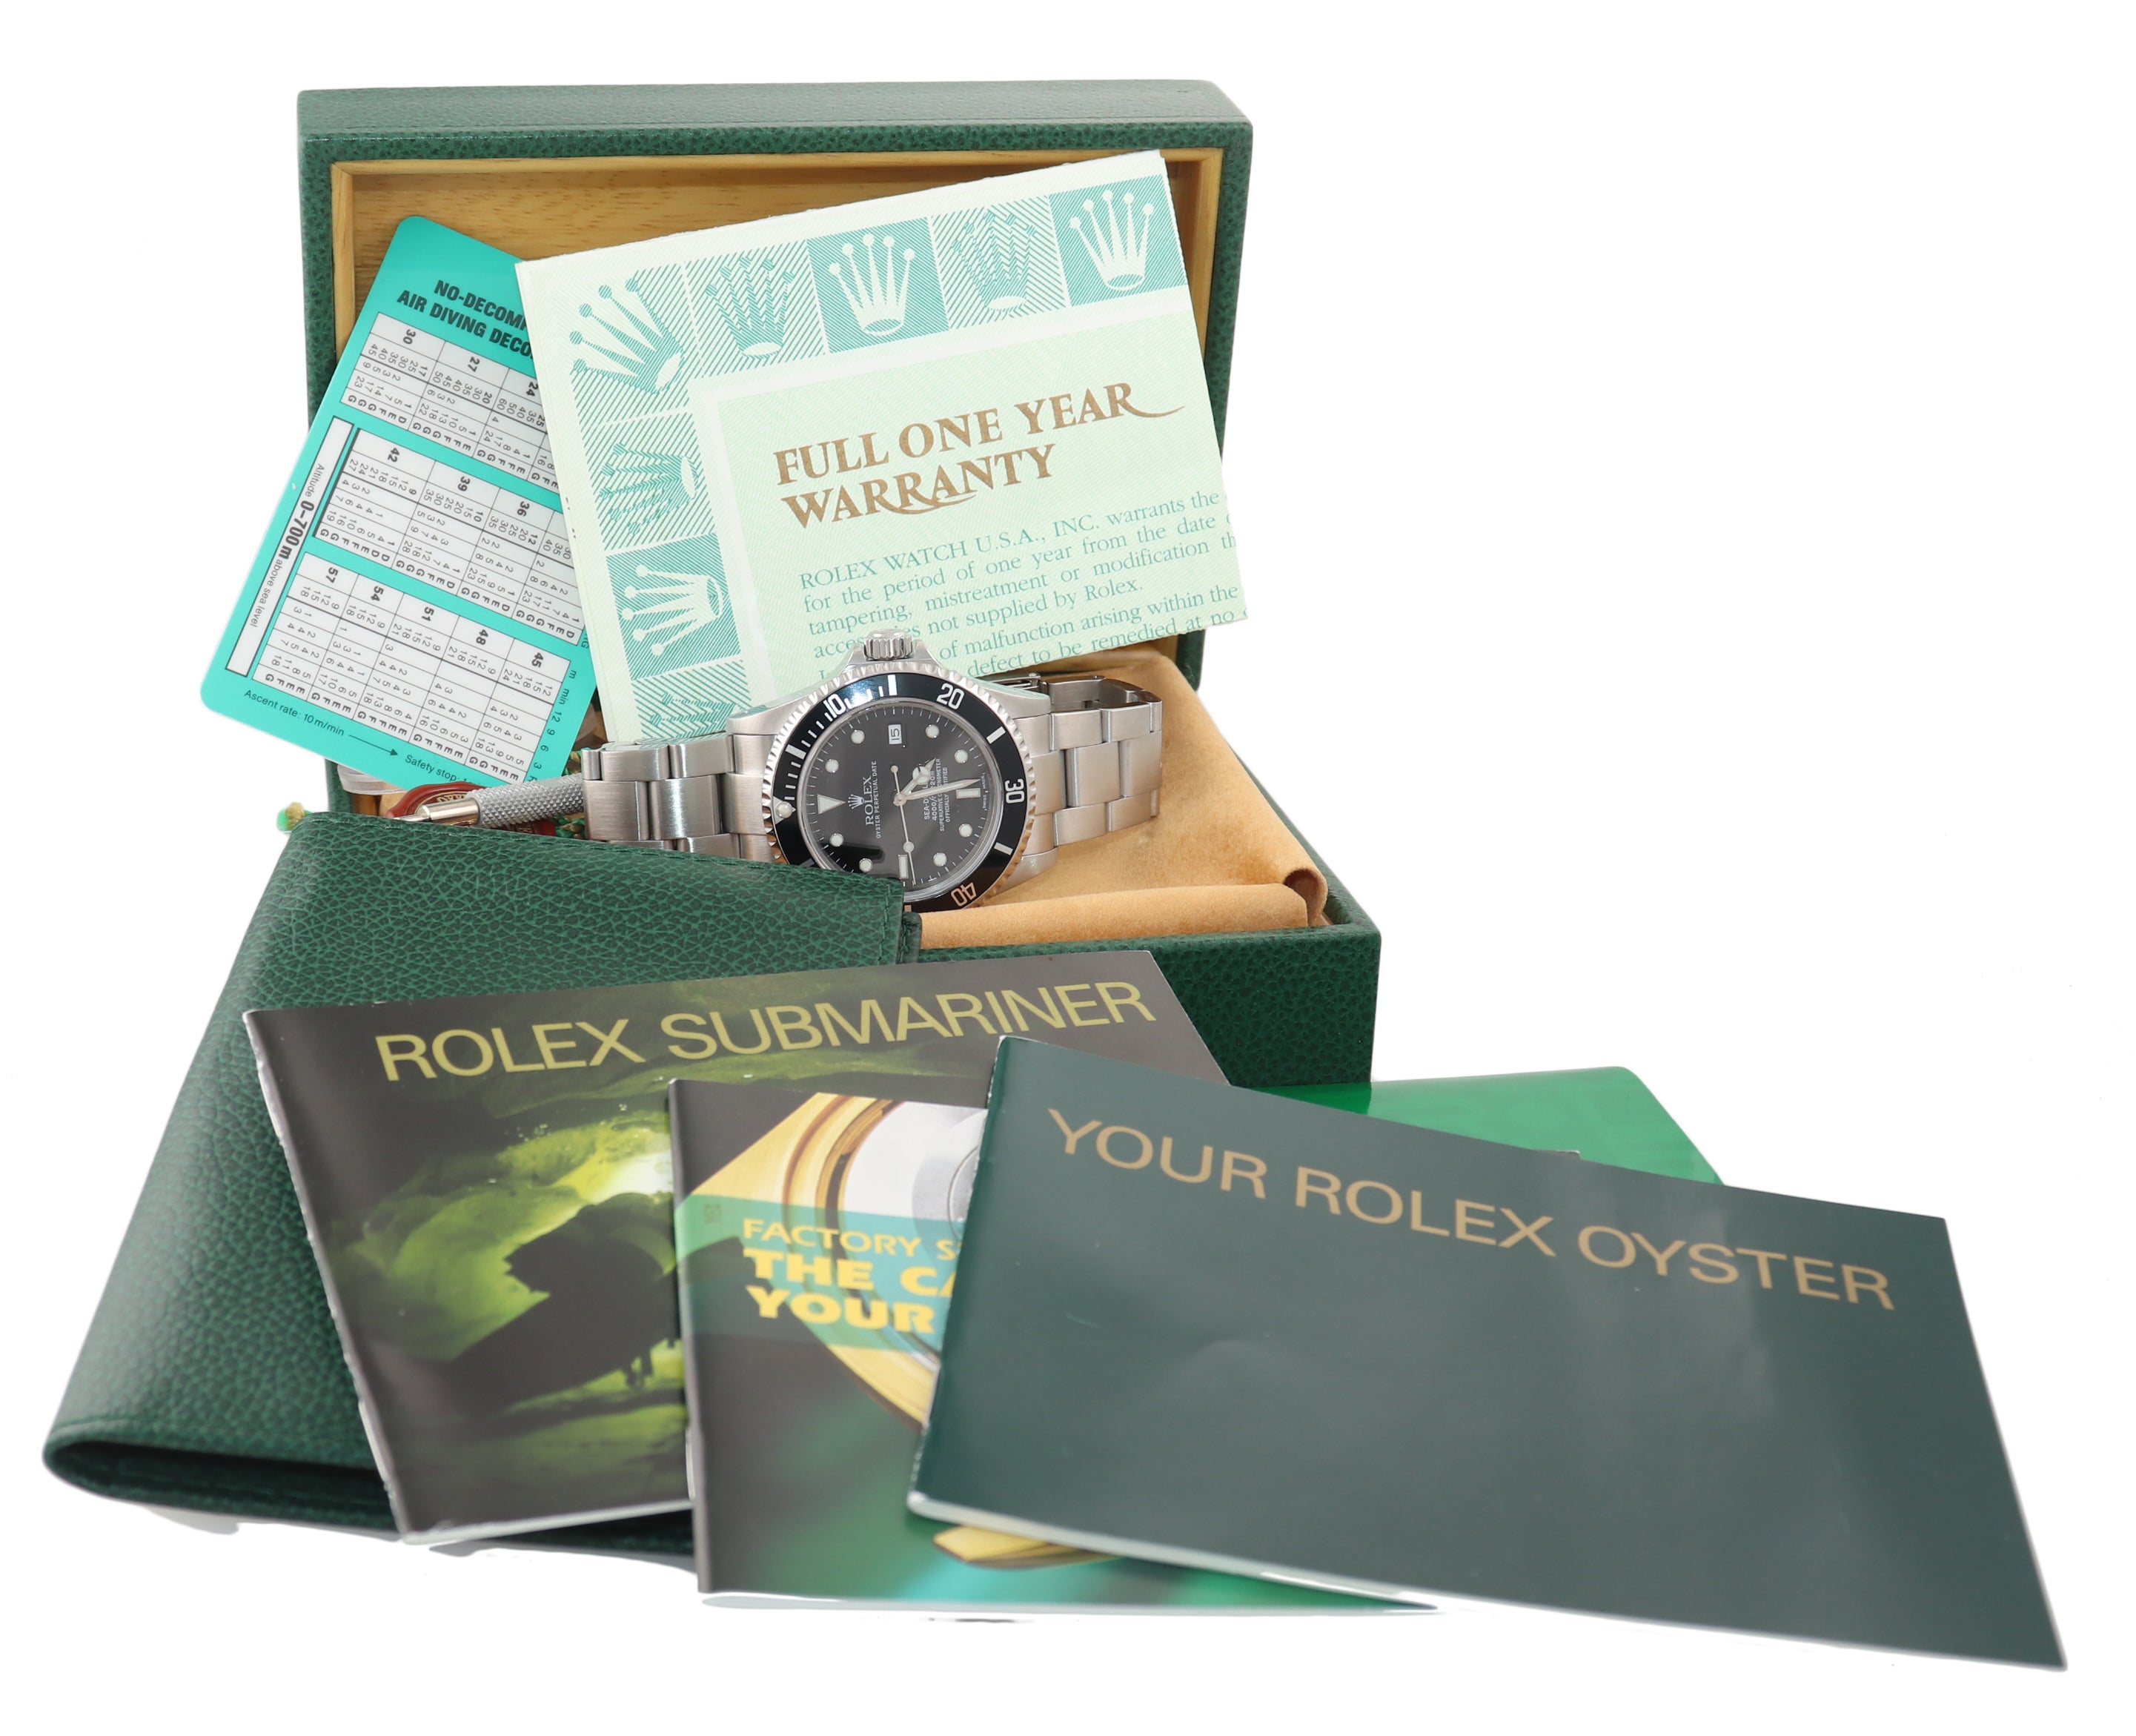 2002 PAPERS Rolex Sea-Dweller Steel 16600 40mm Date Black Diver Kit Watch Box